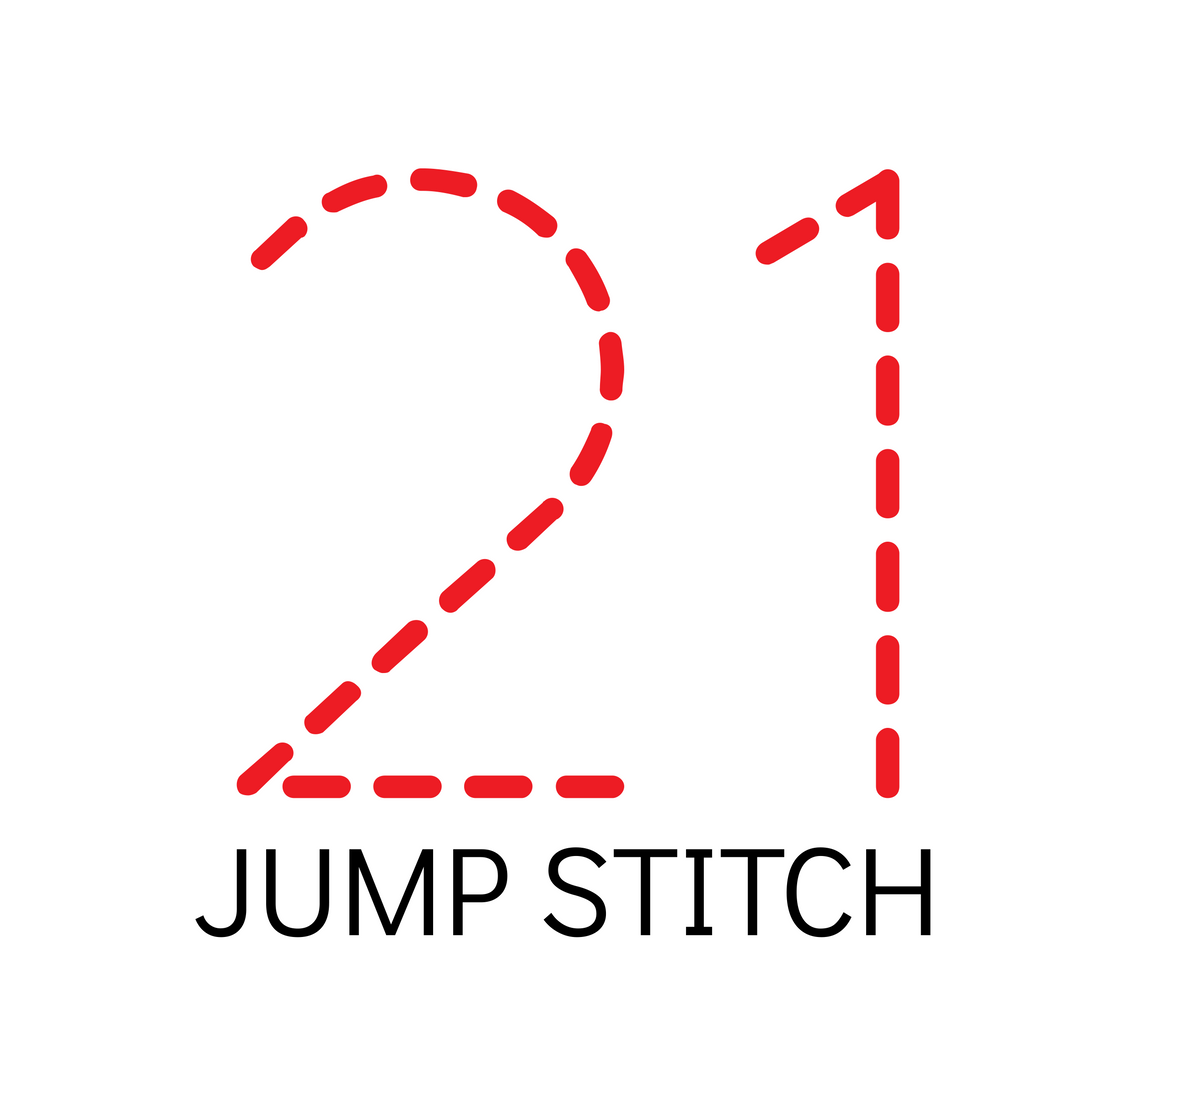 Retro TV Patch – 21 Jump Stitch